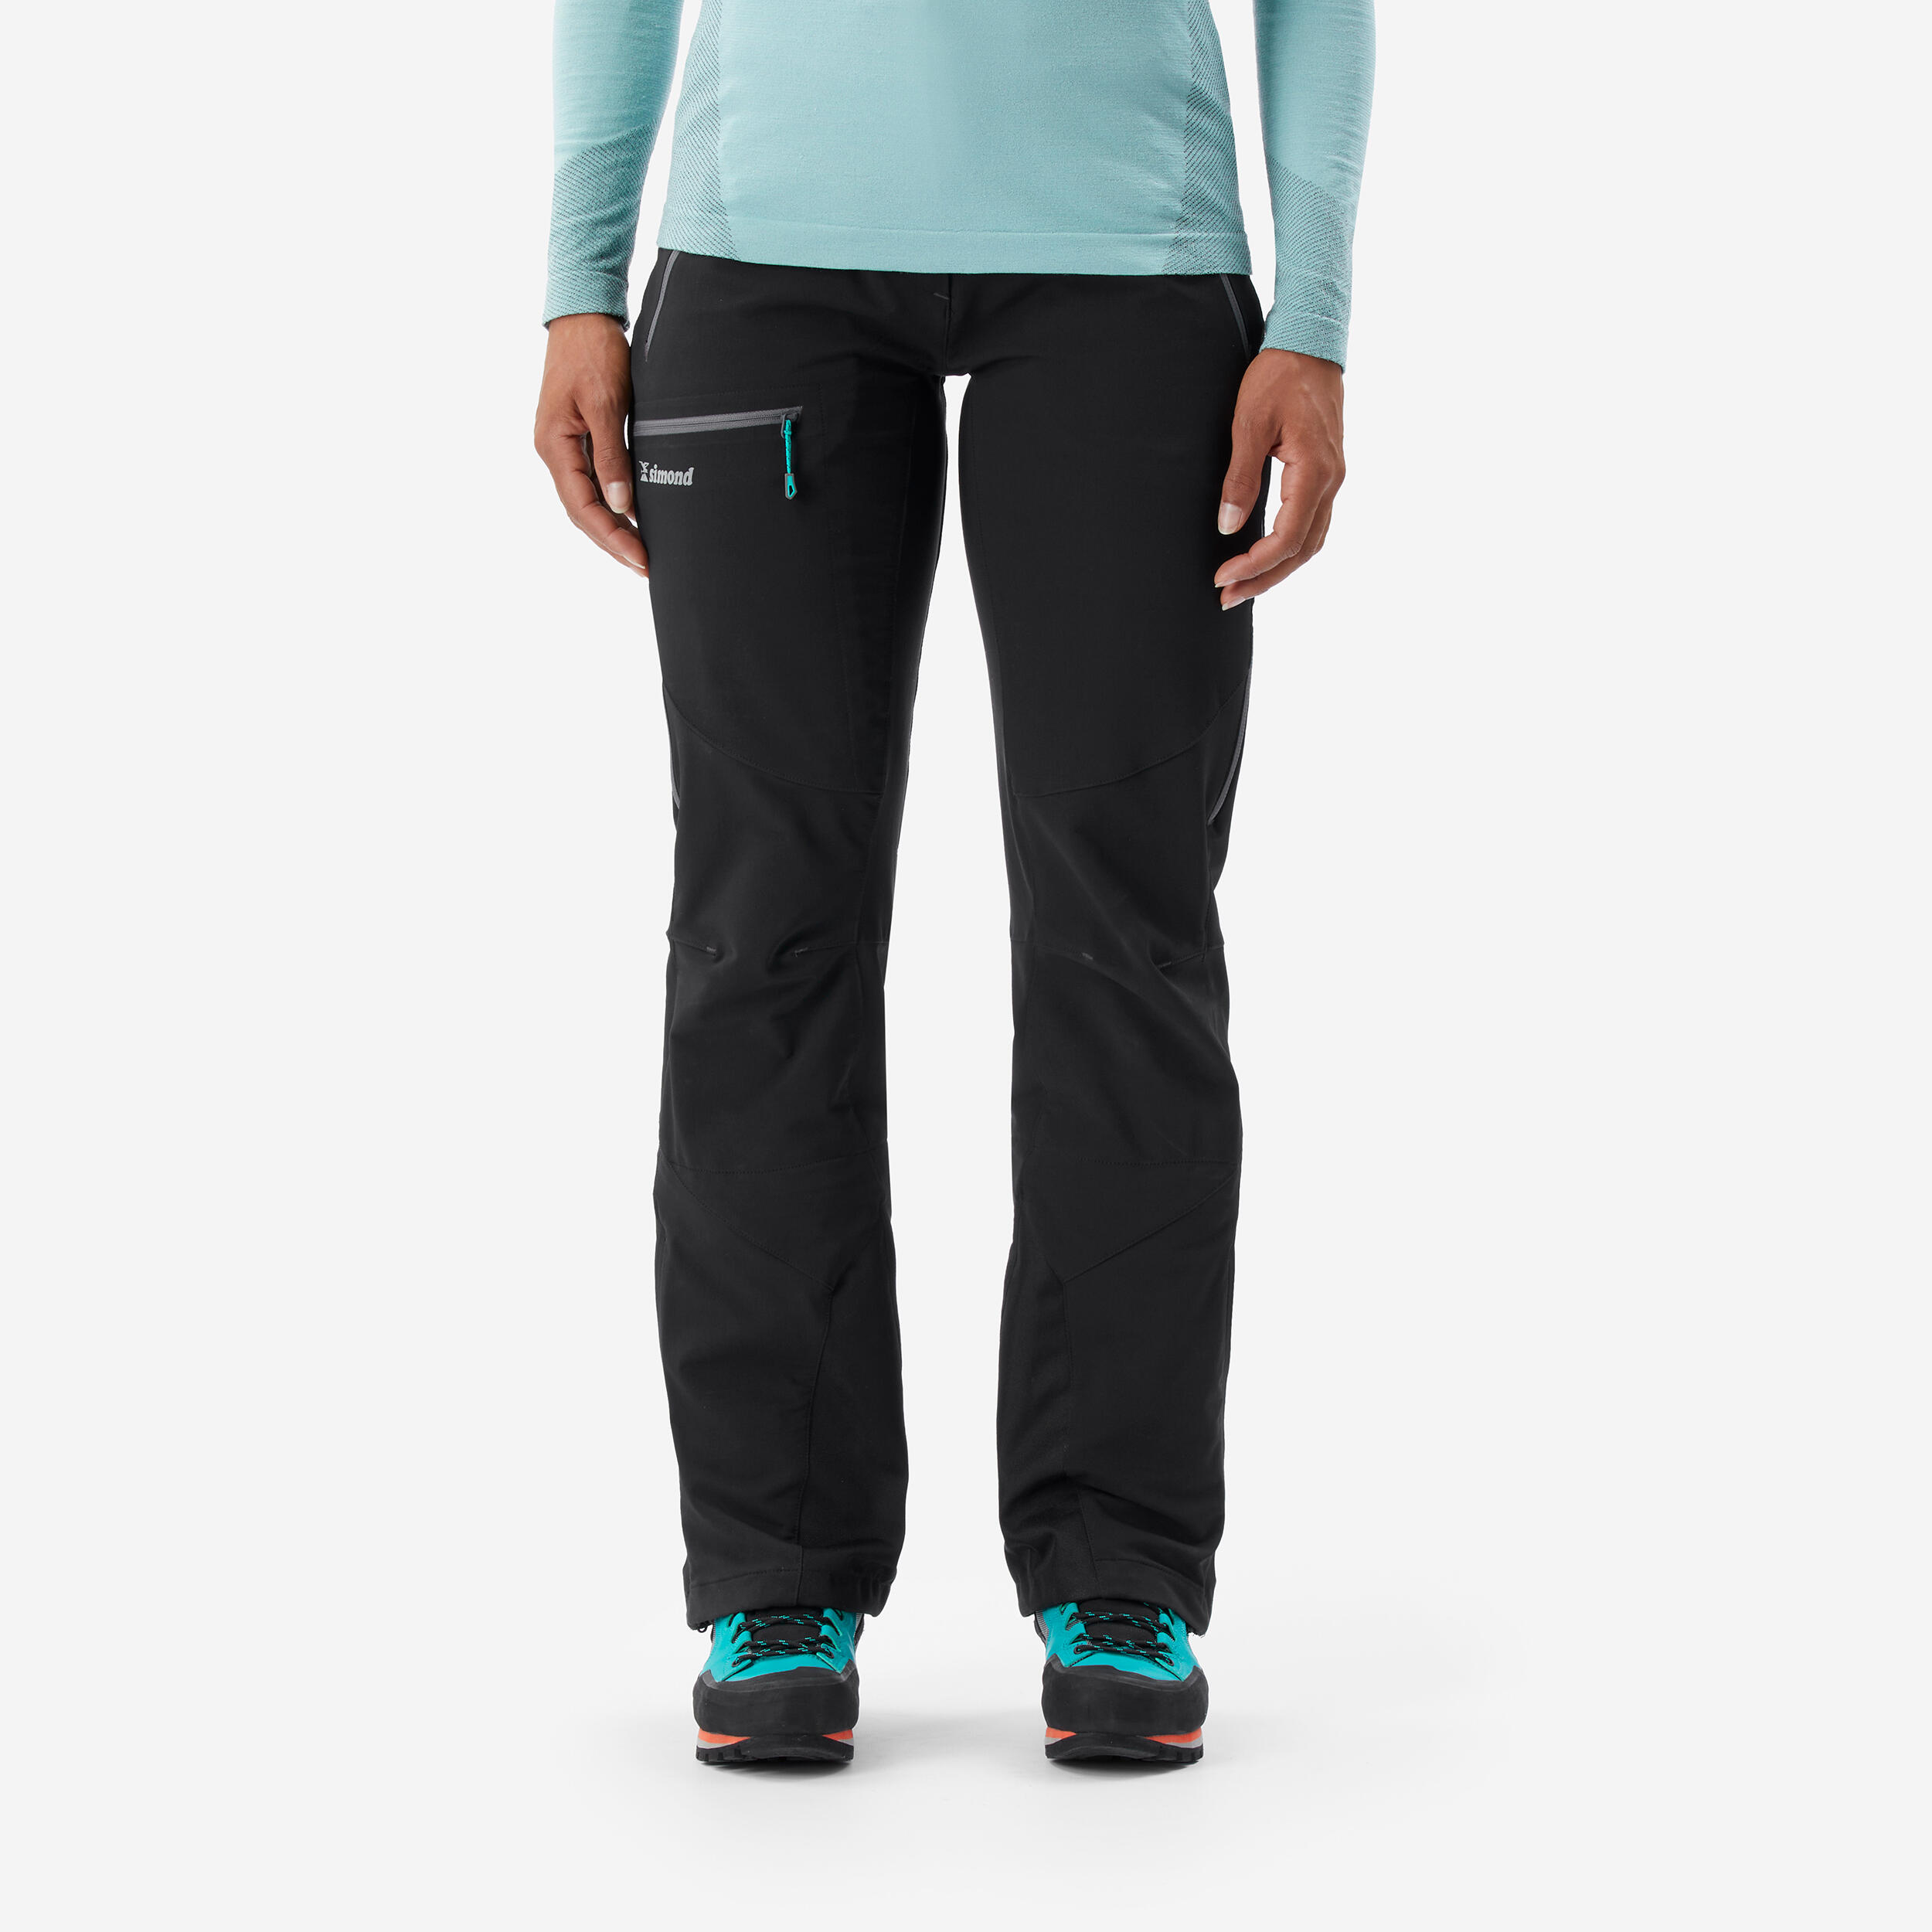 SIMOND Women's Mountaineering Trousers - Alpinism Black